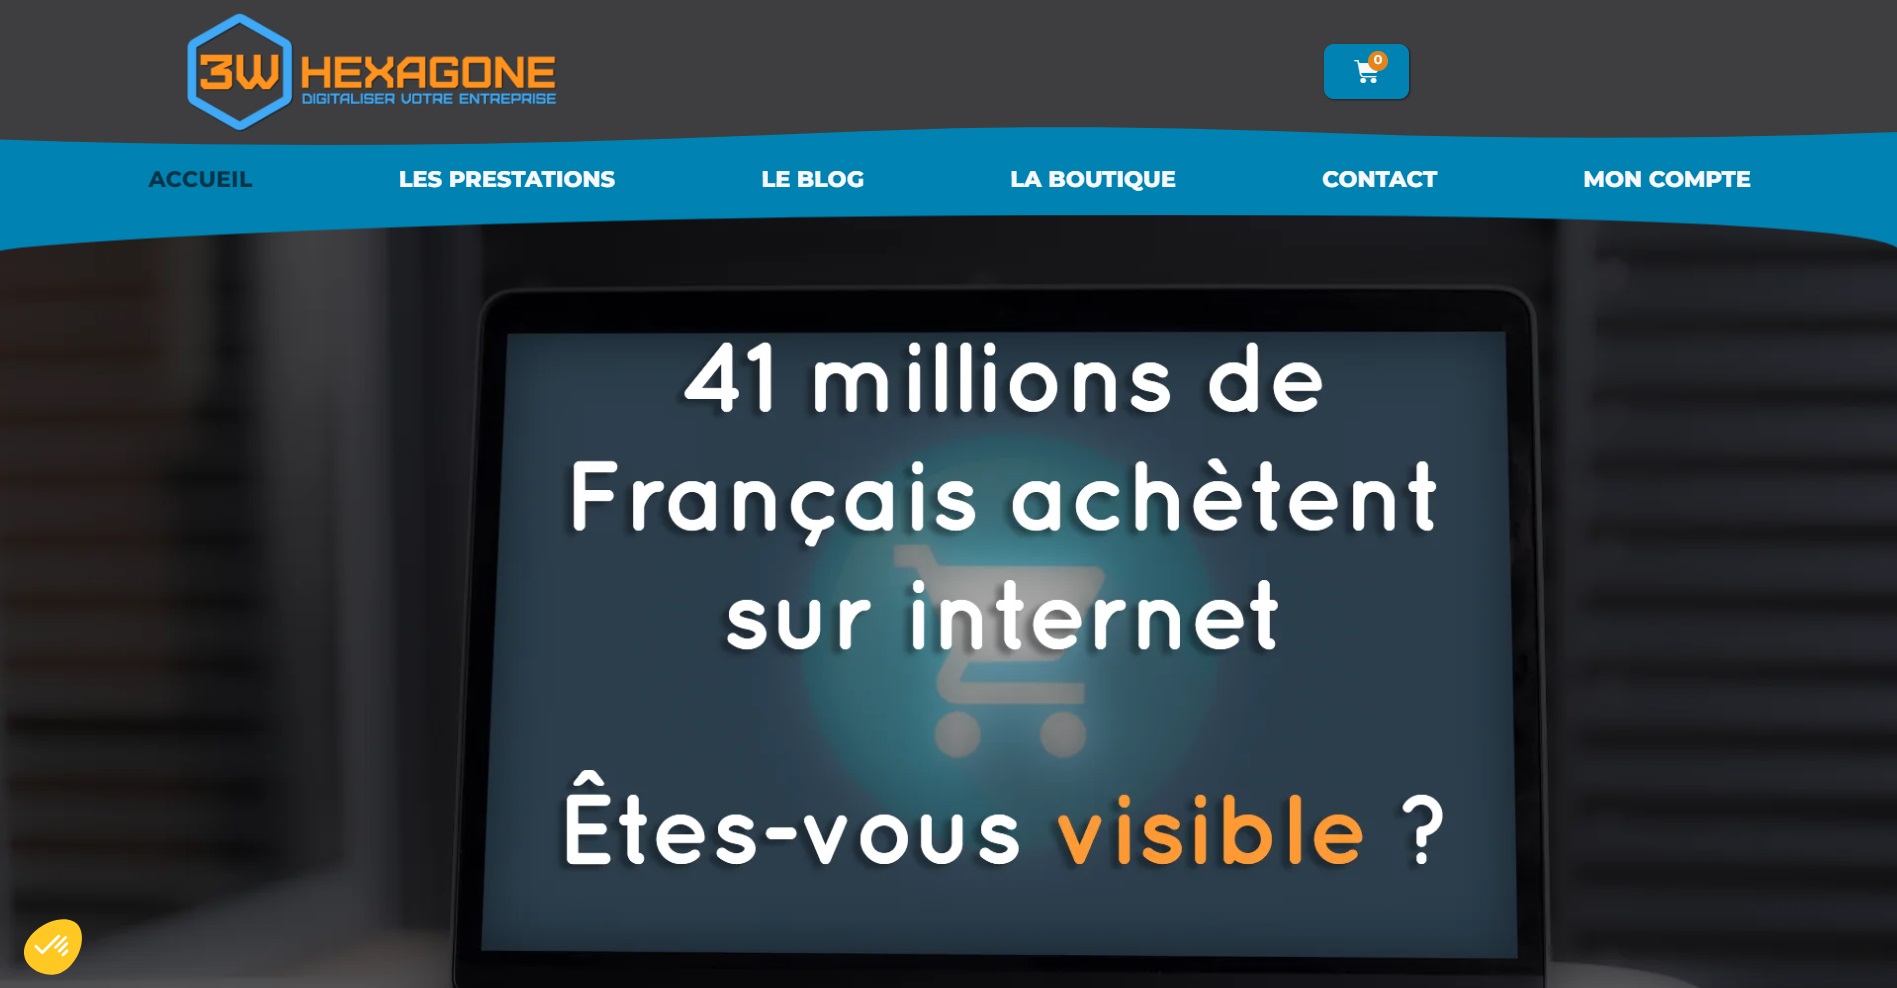  3W Hexagone - Agence Web à Thionville